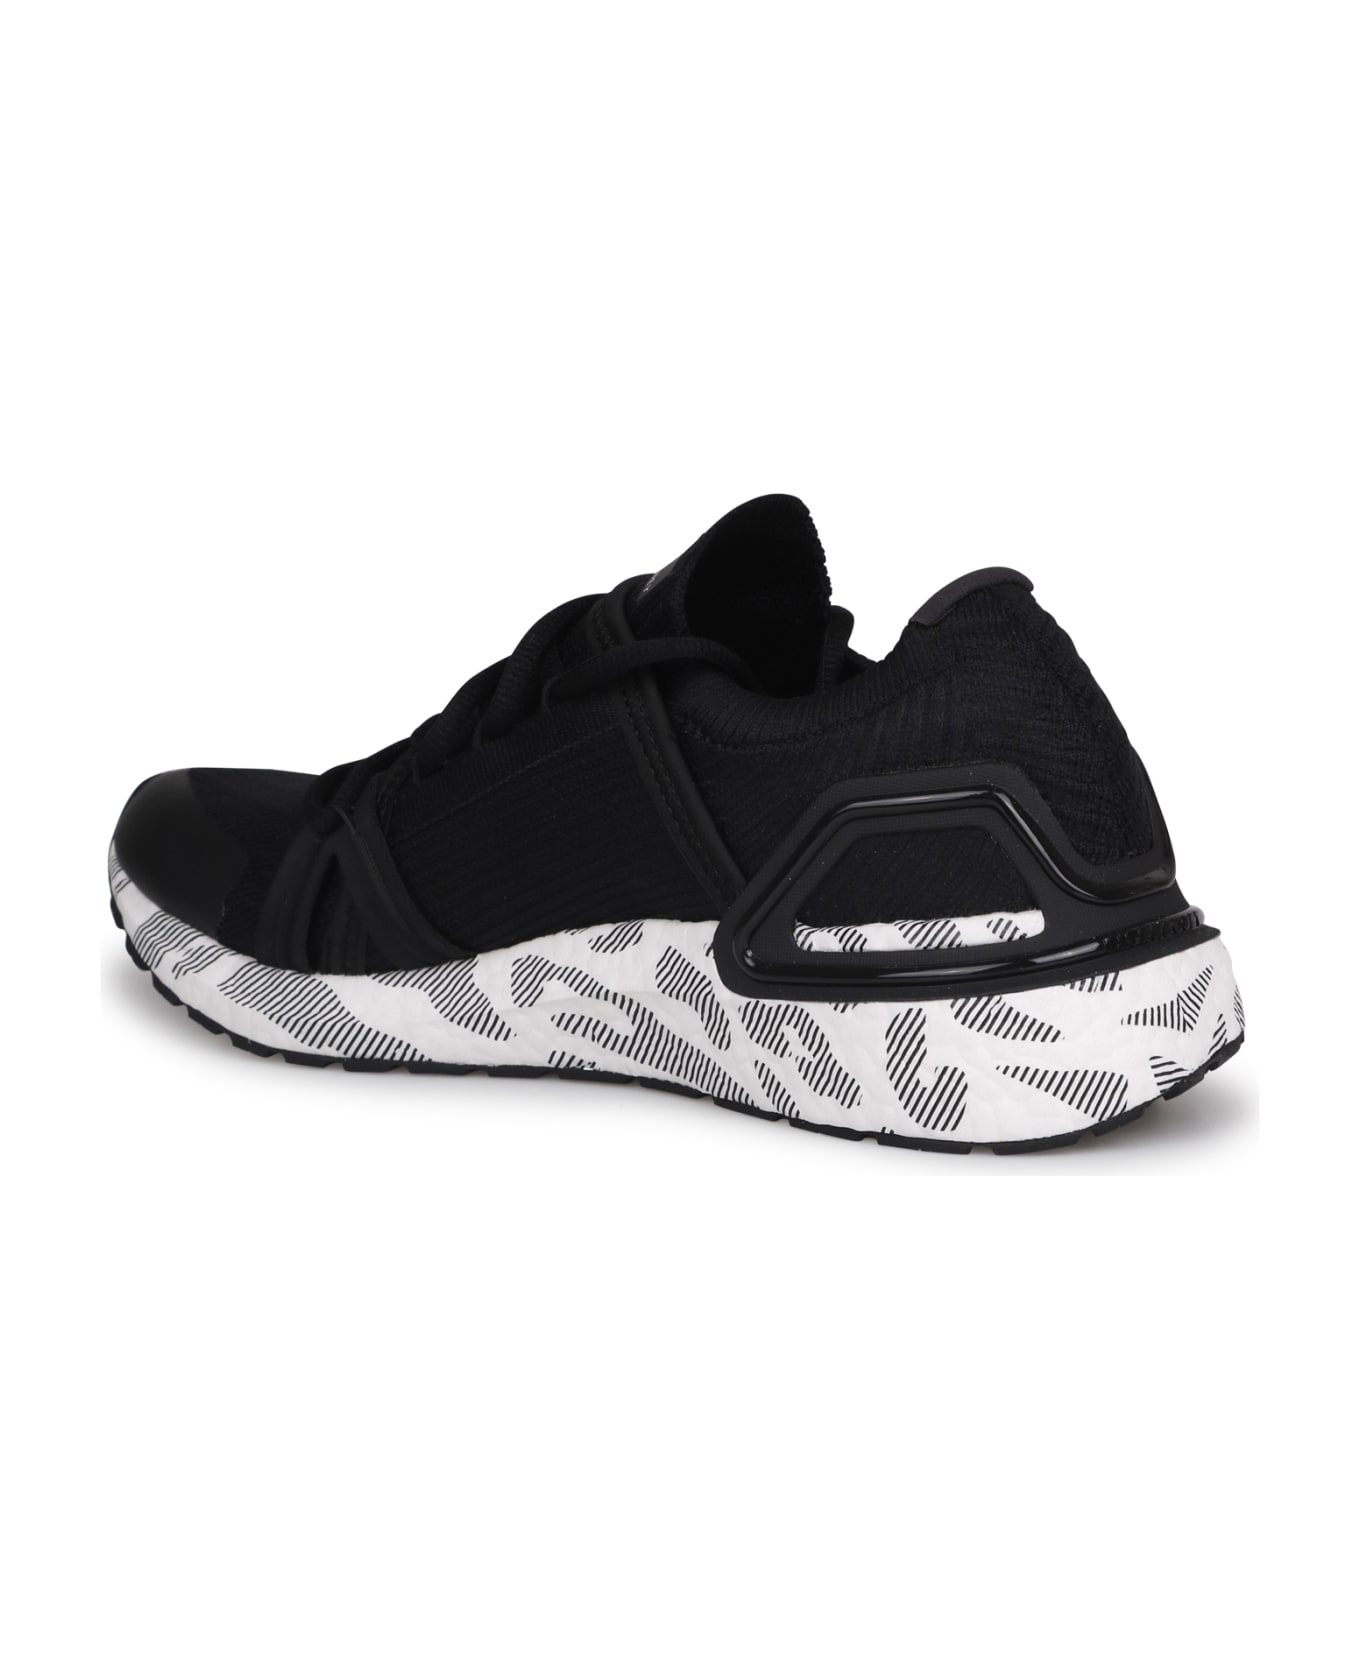 Adidas by Stella McCartney Ultraboost 20 Low-top Sneakers - Black スニーカー